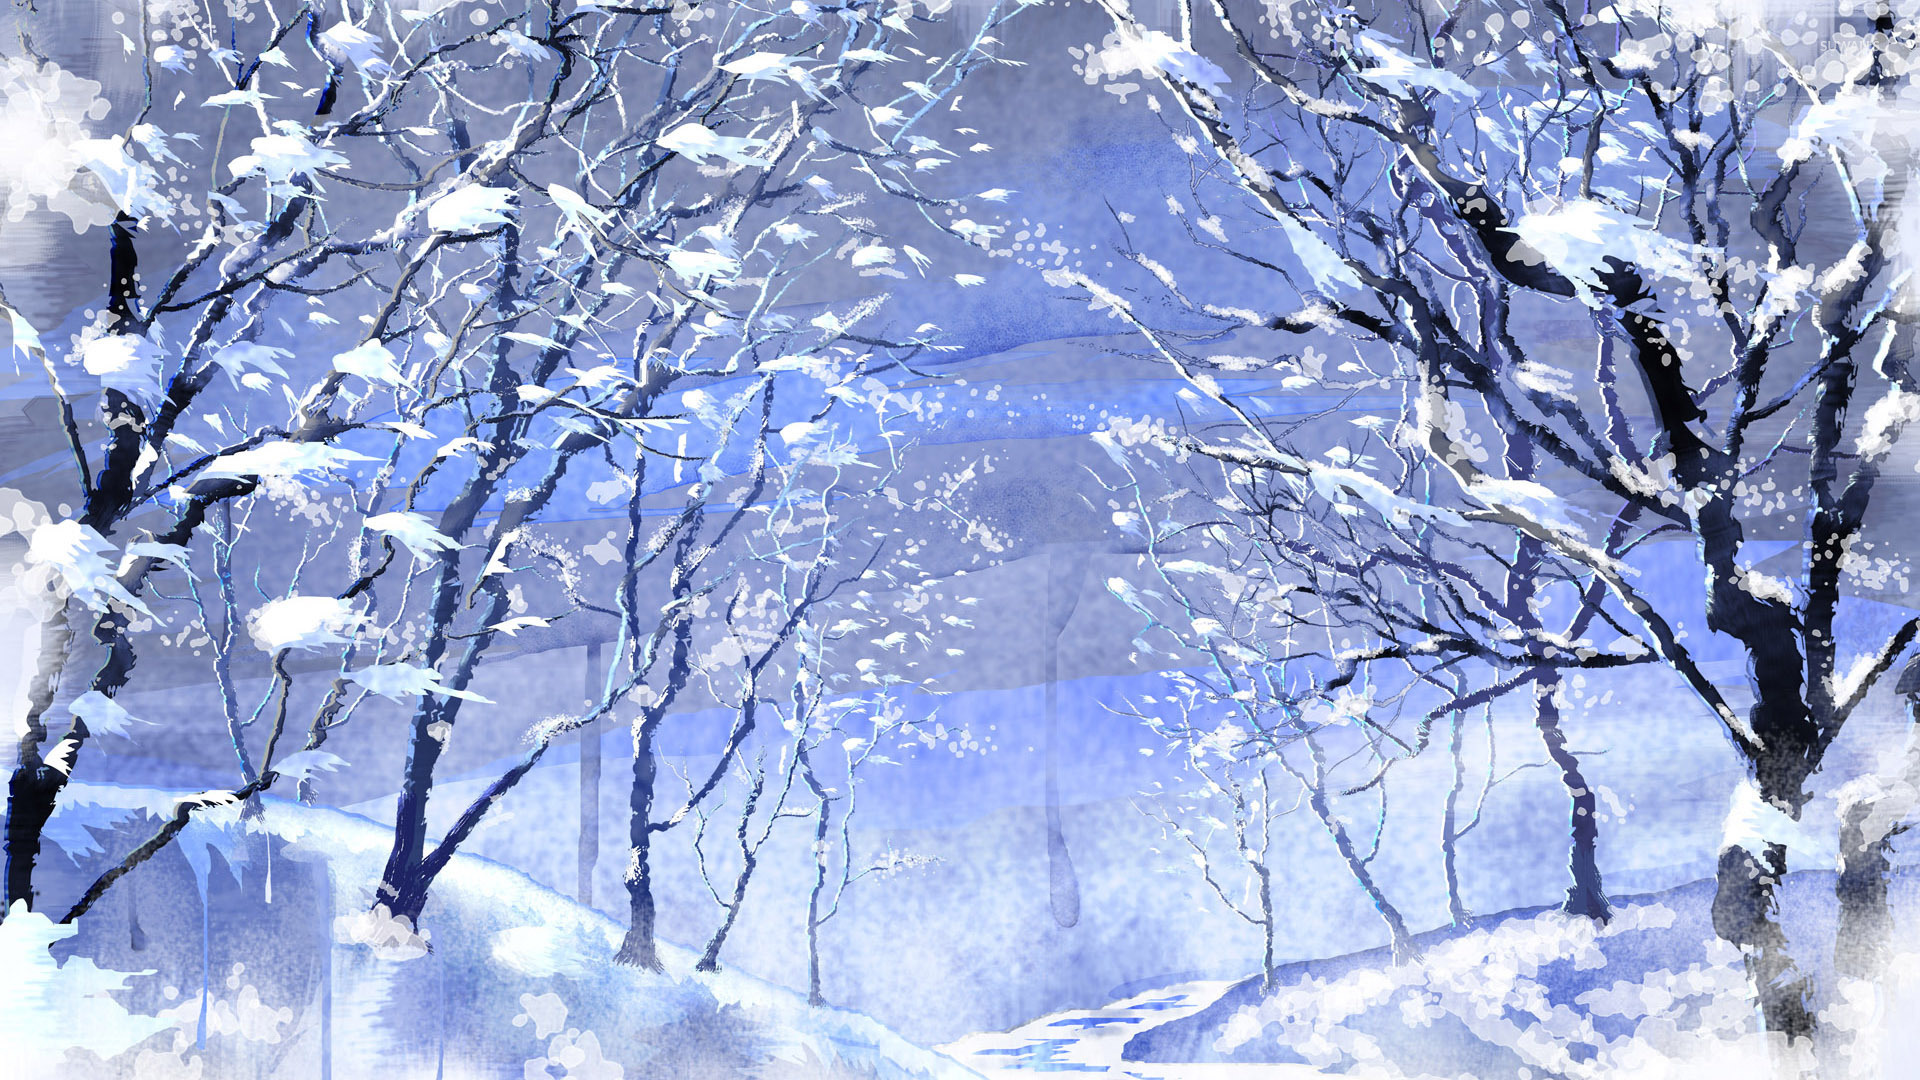 Path through the frozen trees wallpaper - Digital Art wallpapers ...